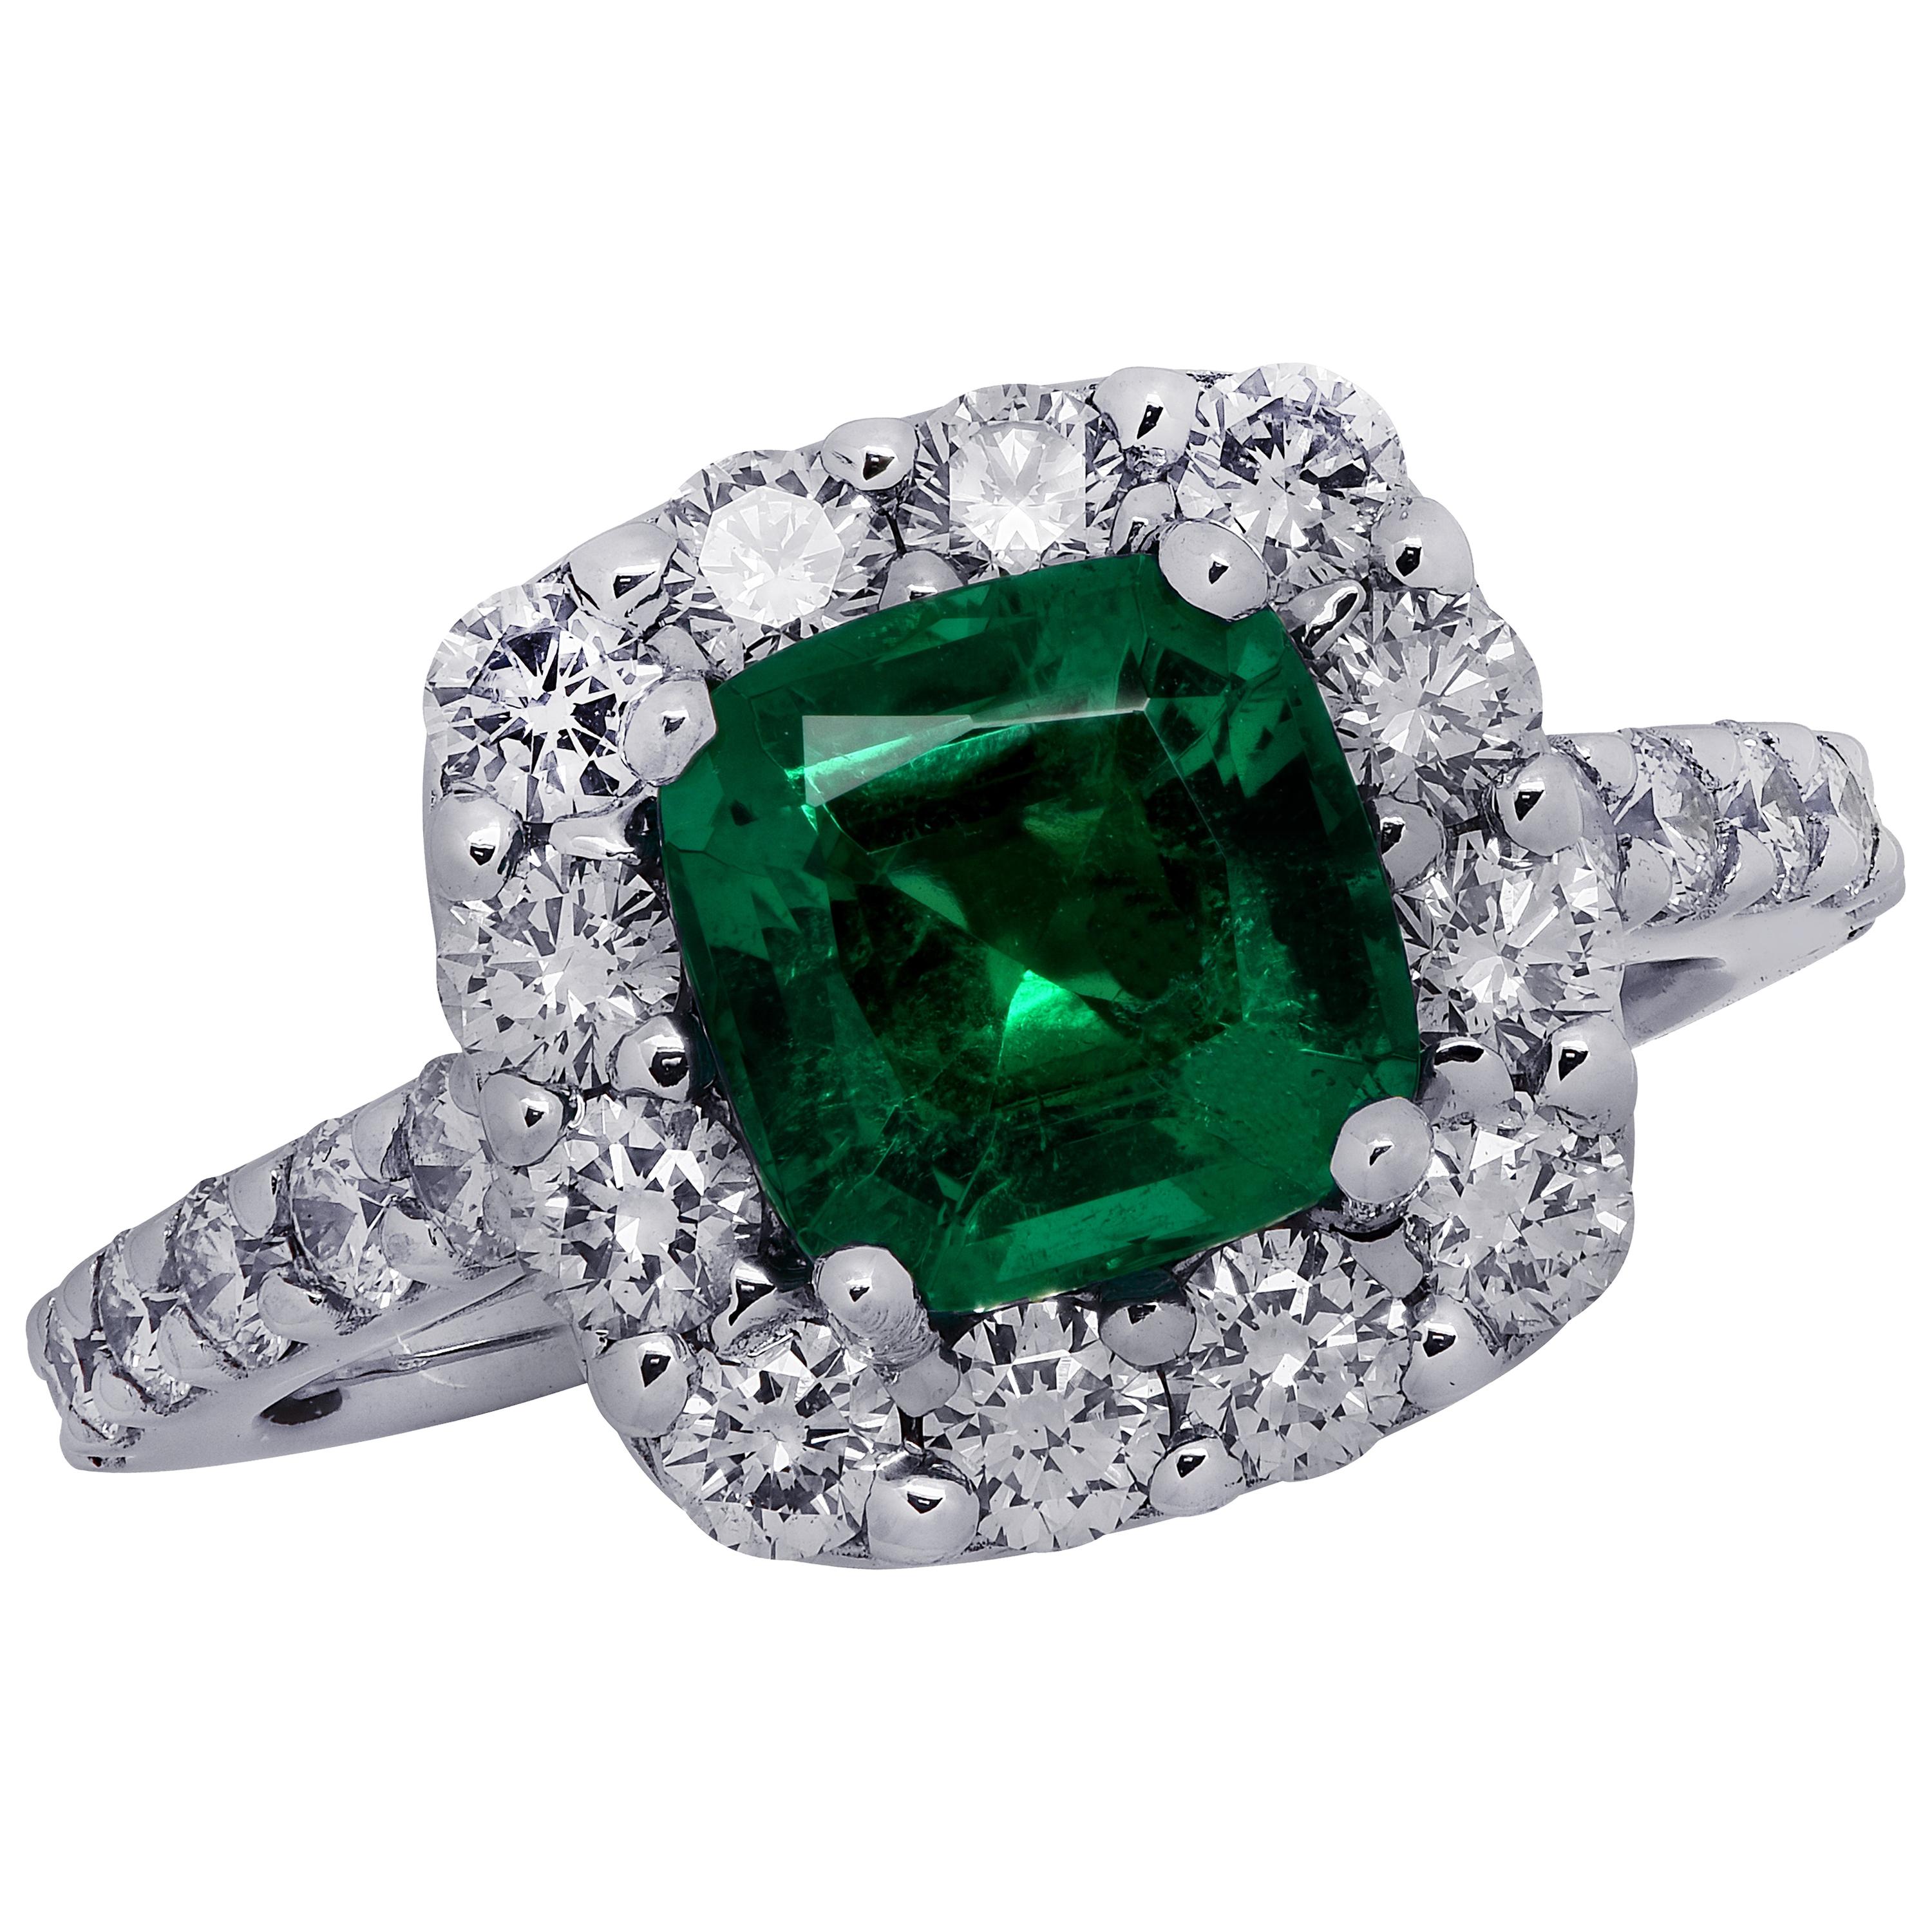 Vivid Diamonds AGL Certified Colombian Emerald Ring